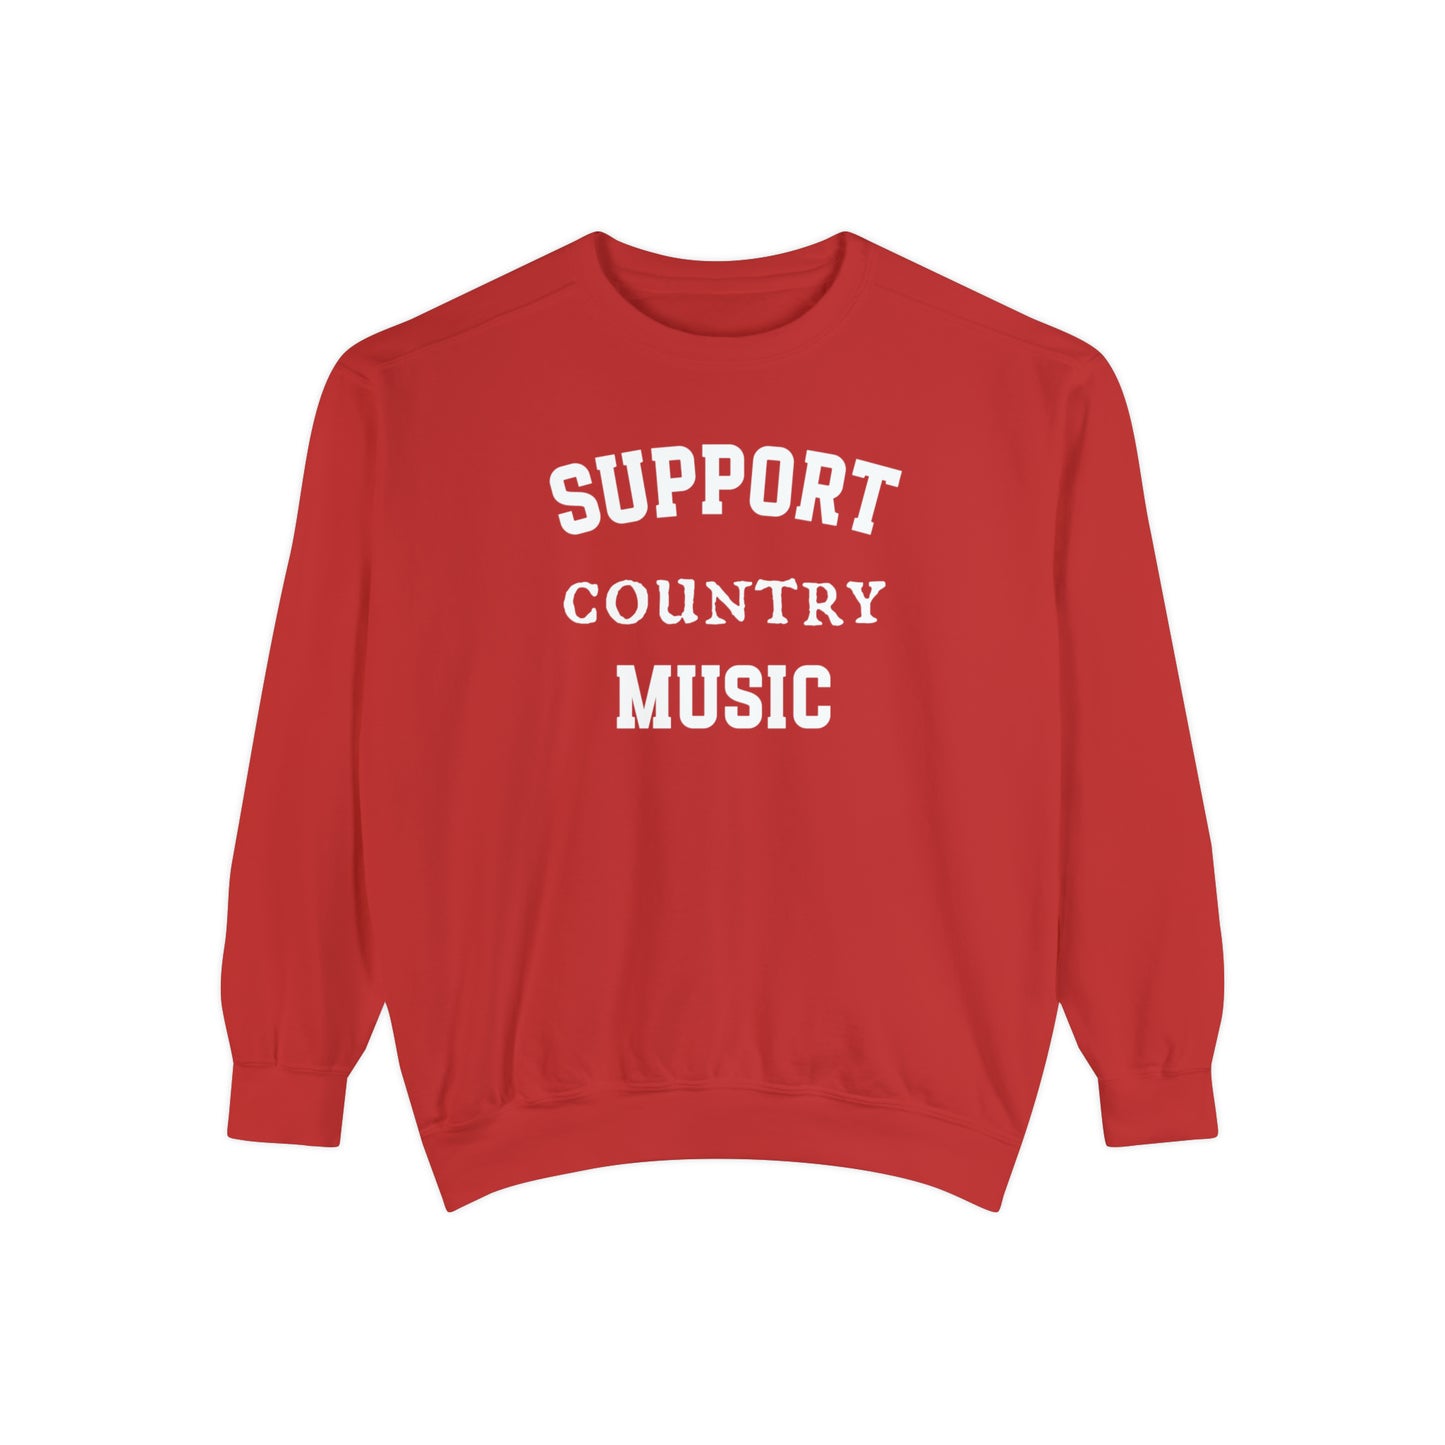 Support Country Music Sweatshirt